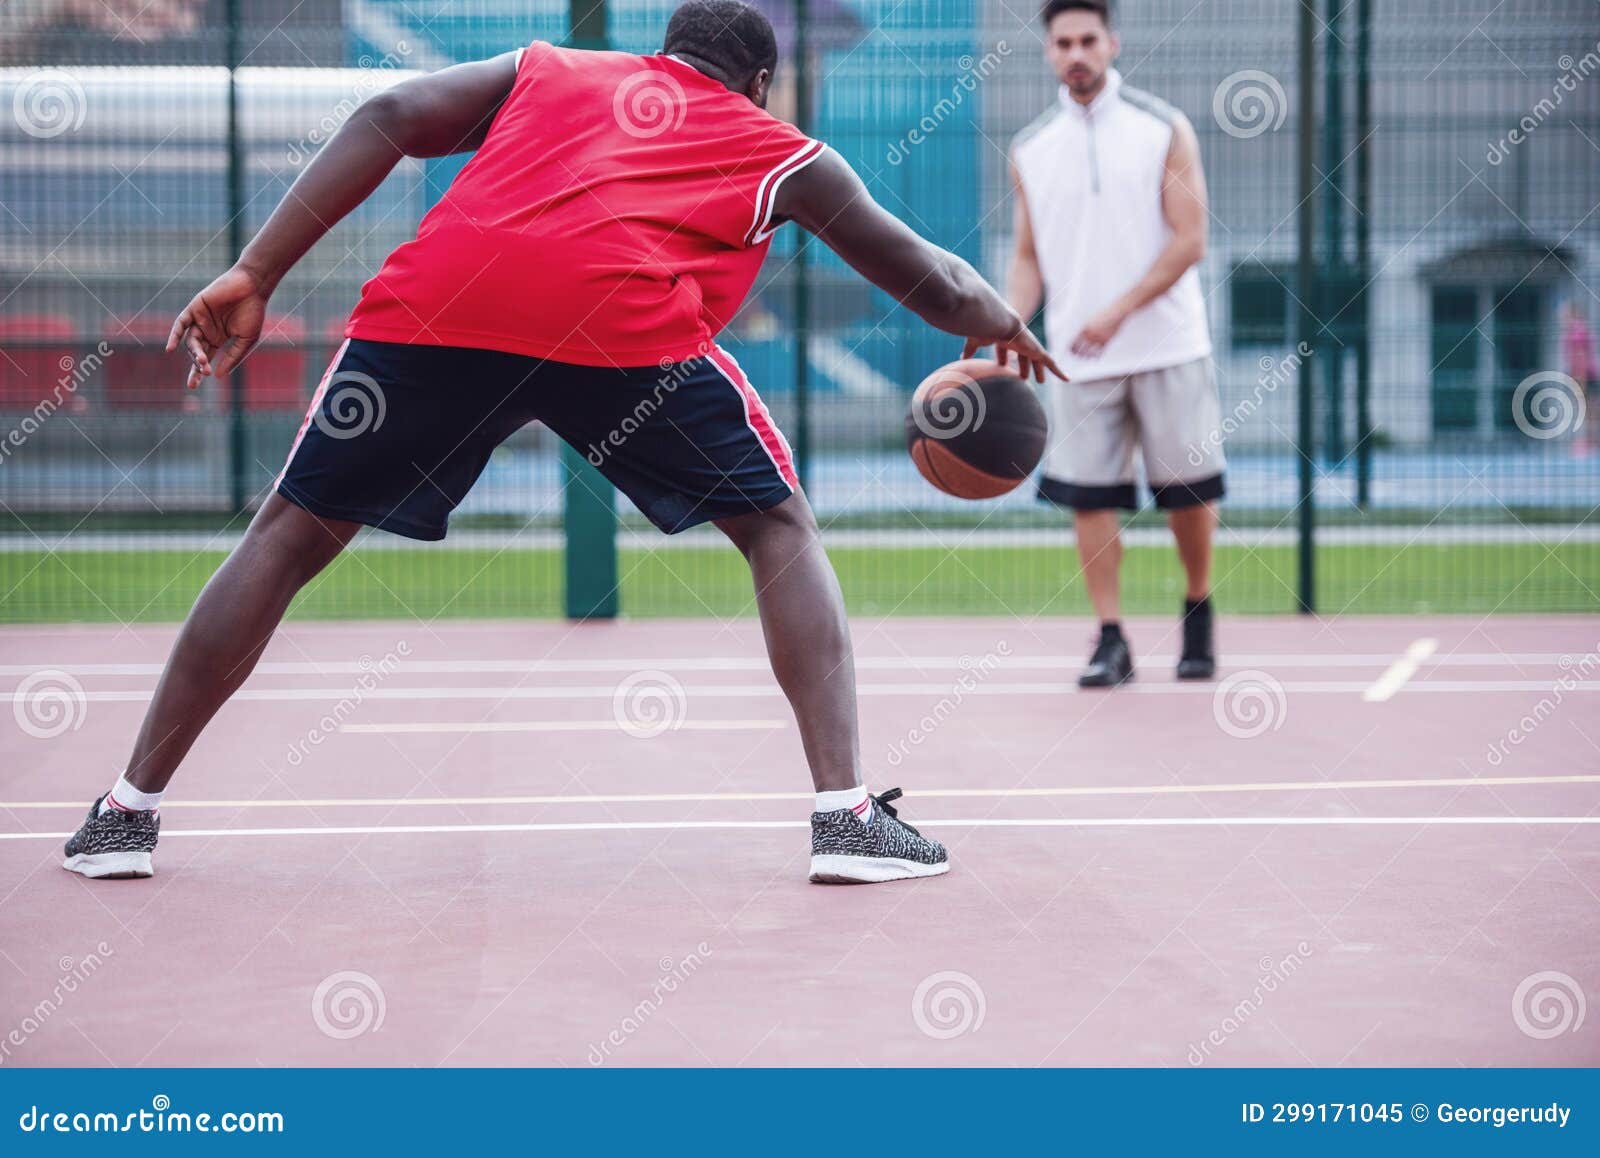 Guys playing basketball stock image. Image of exercise - 299171045